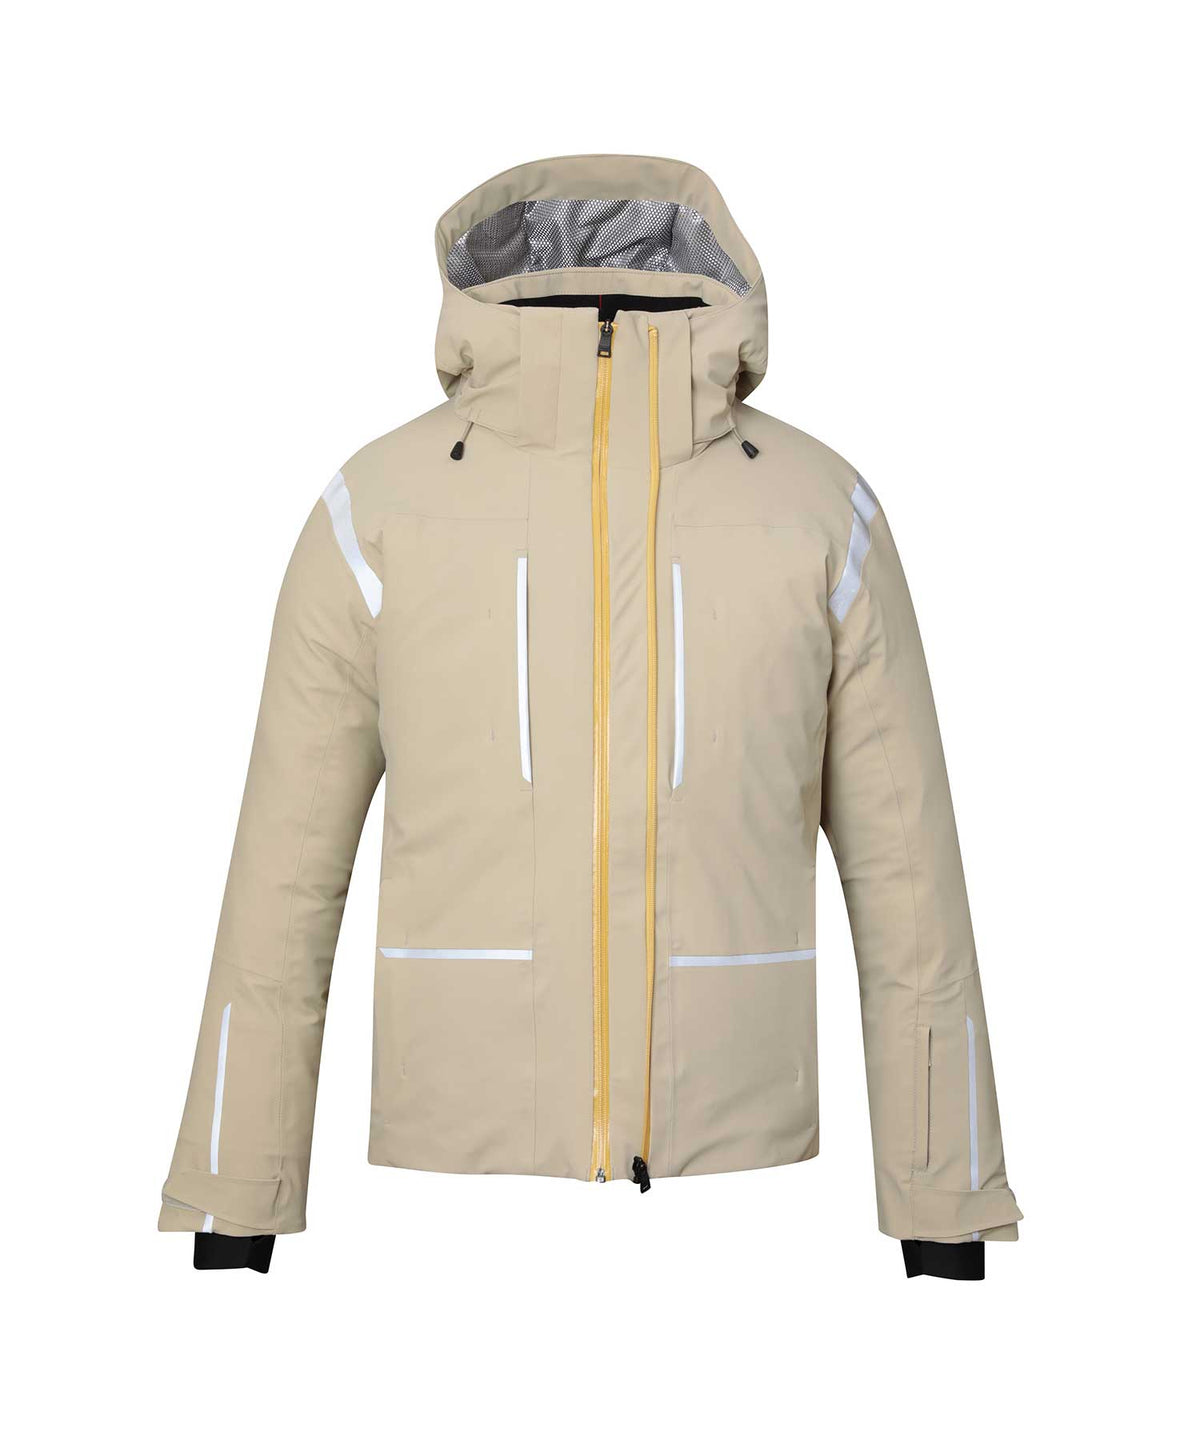 MENS】スキーウェア アウタージャケット トップス Soft Shell Jacket